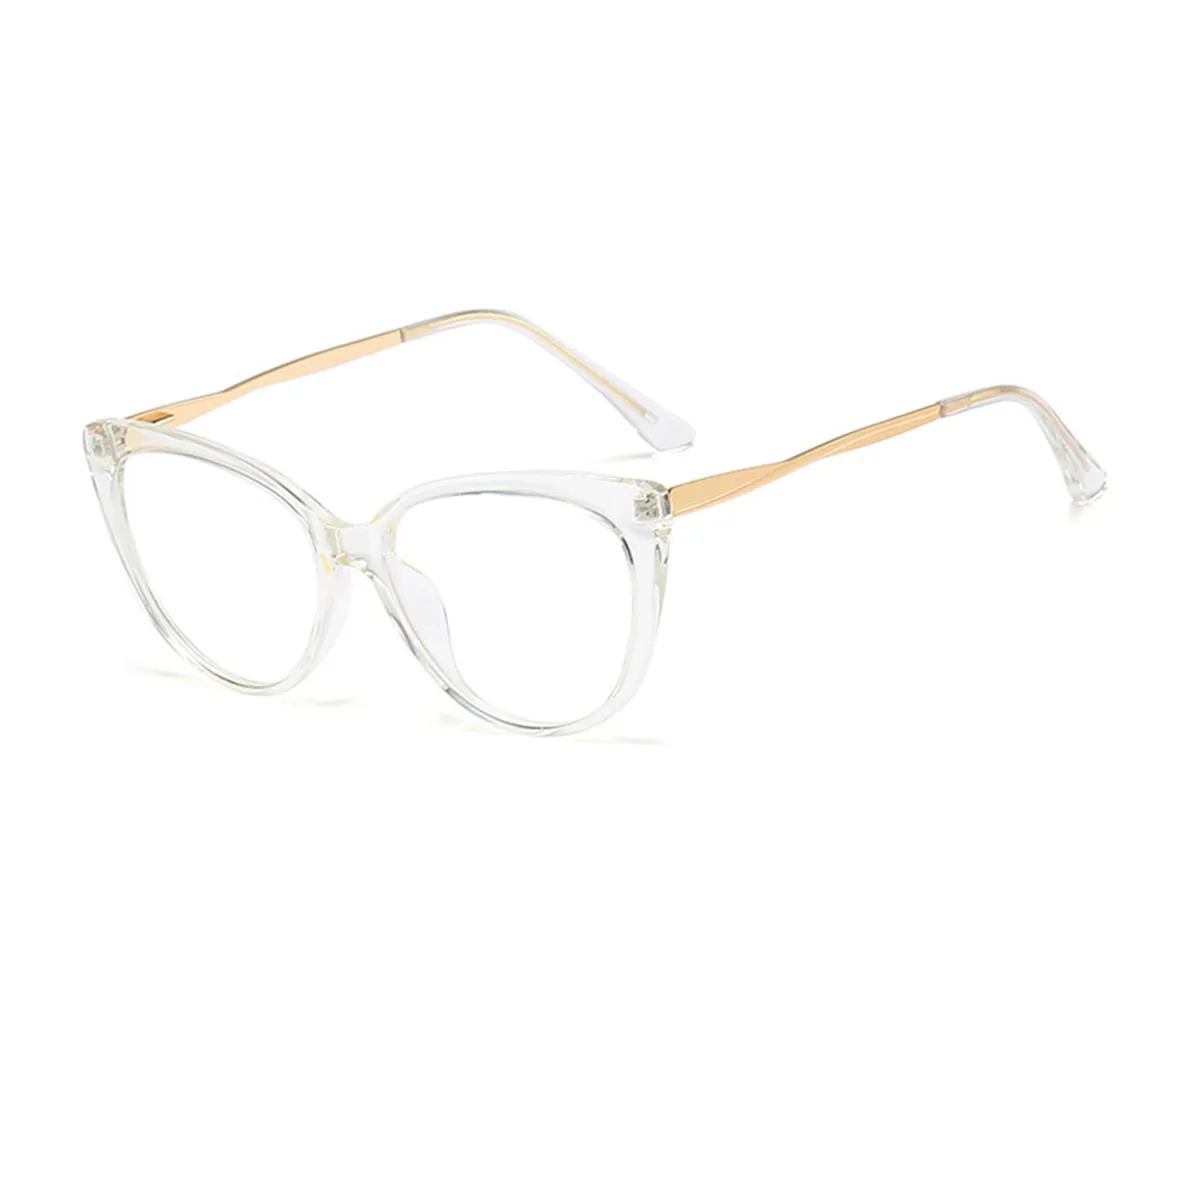 Alenie - Cat-eye White Glasses for Women